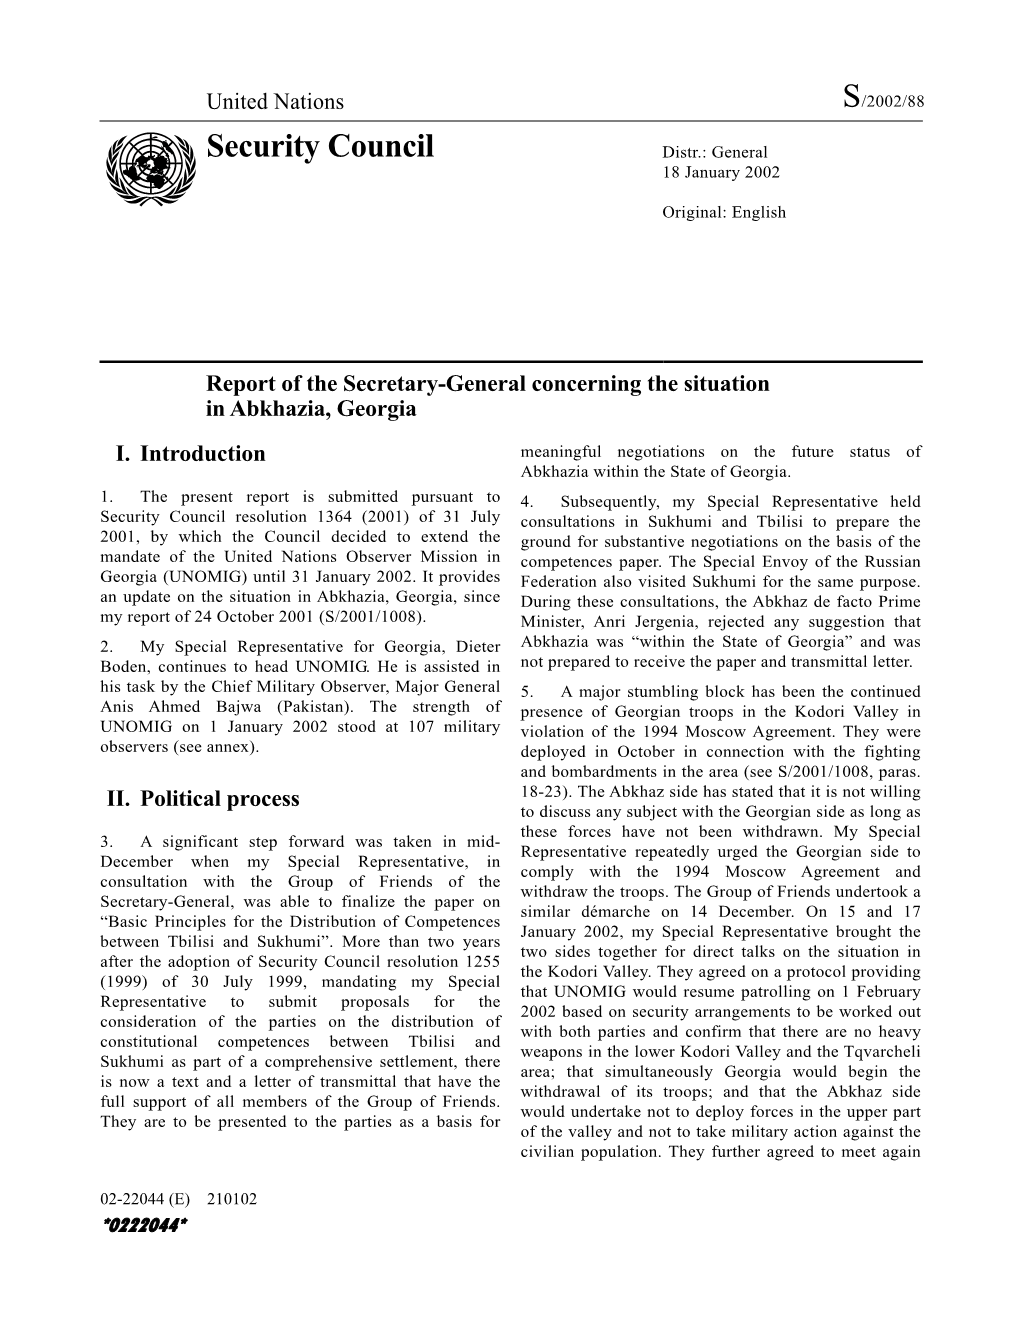 Security Council Distr.: General 18 January 2002